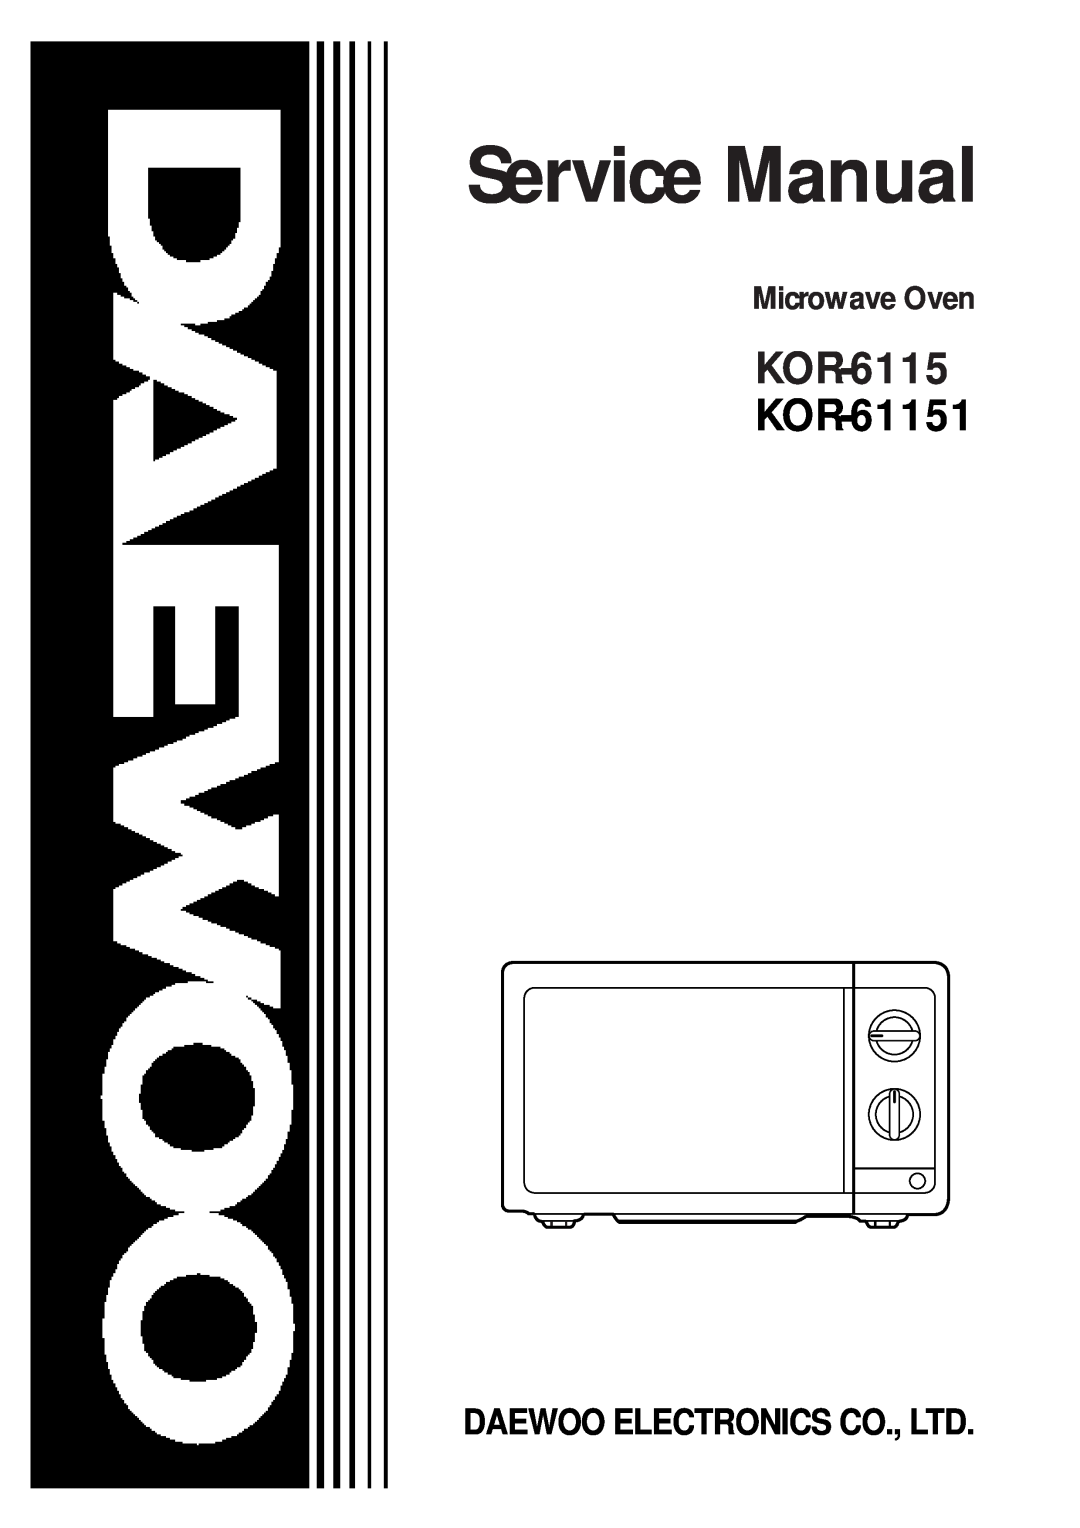 Daewoo service manual KOR-61155 KOR-61151, Microwave Oven 